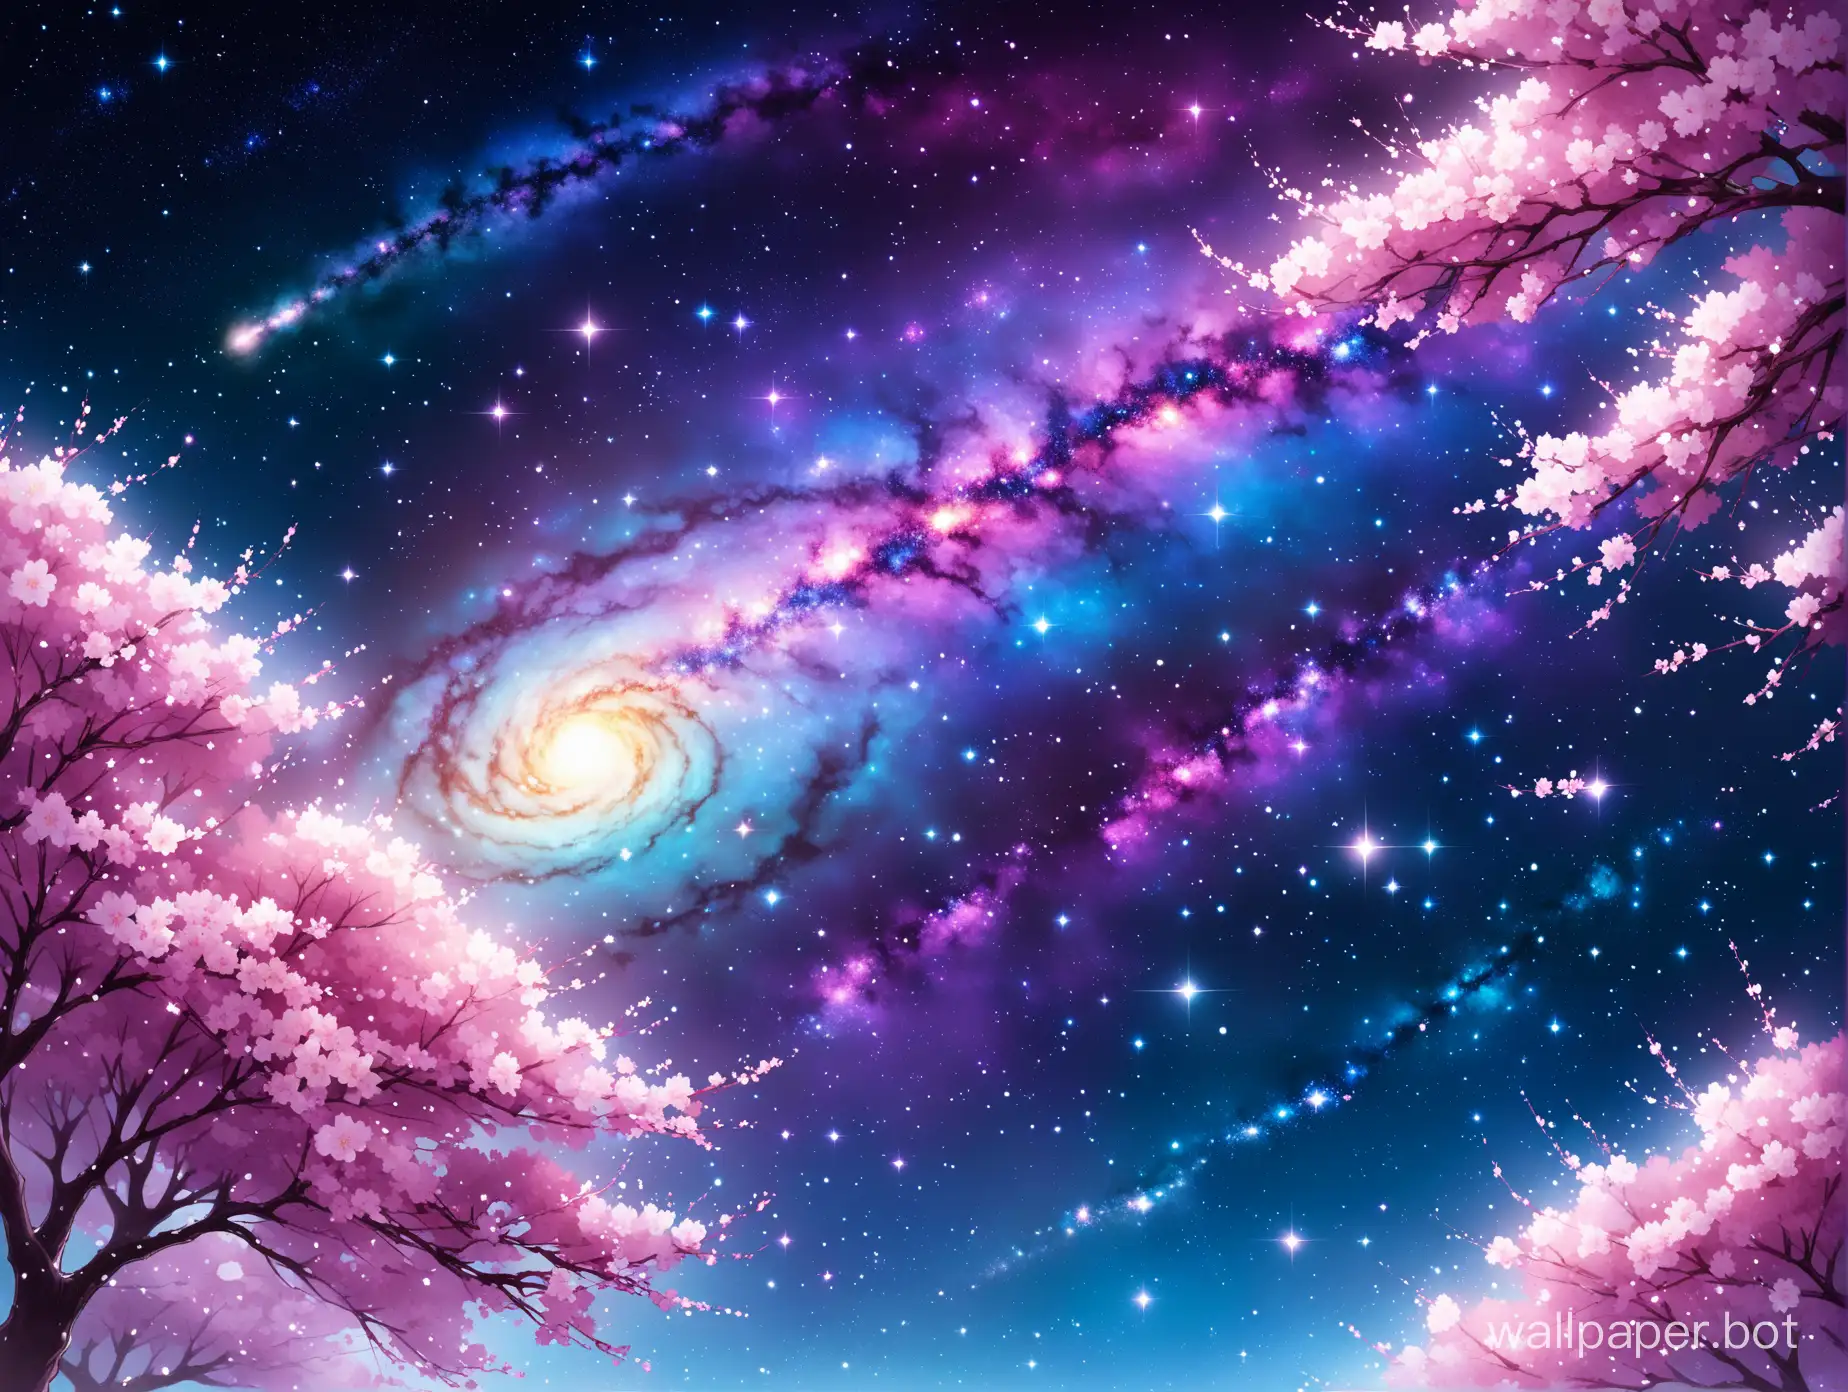 Enchanting-Cherry-Blossom-Galaxy-in-Cosmic-Bloom